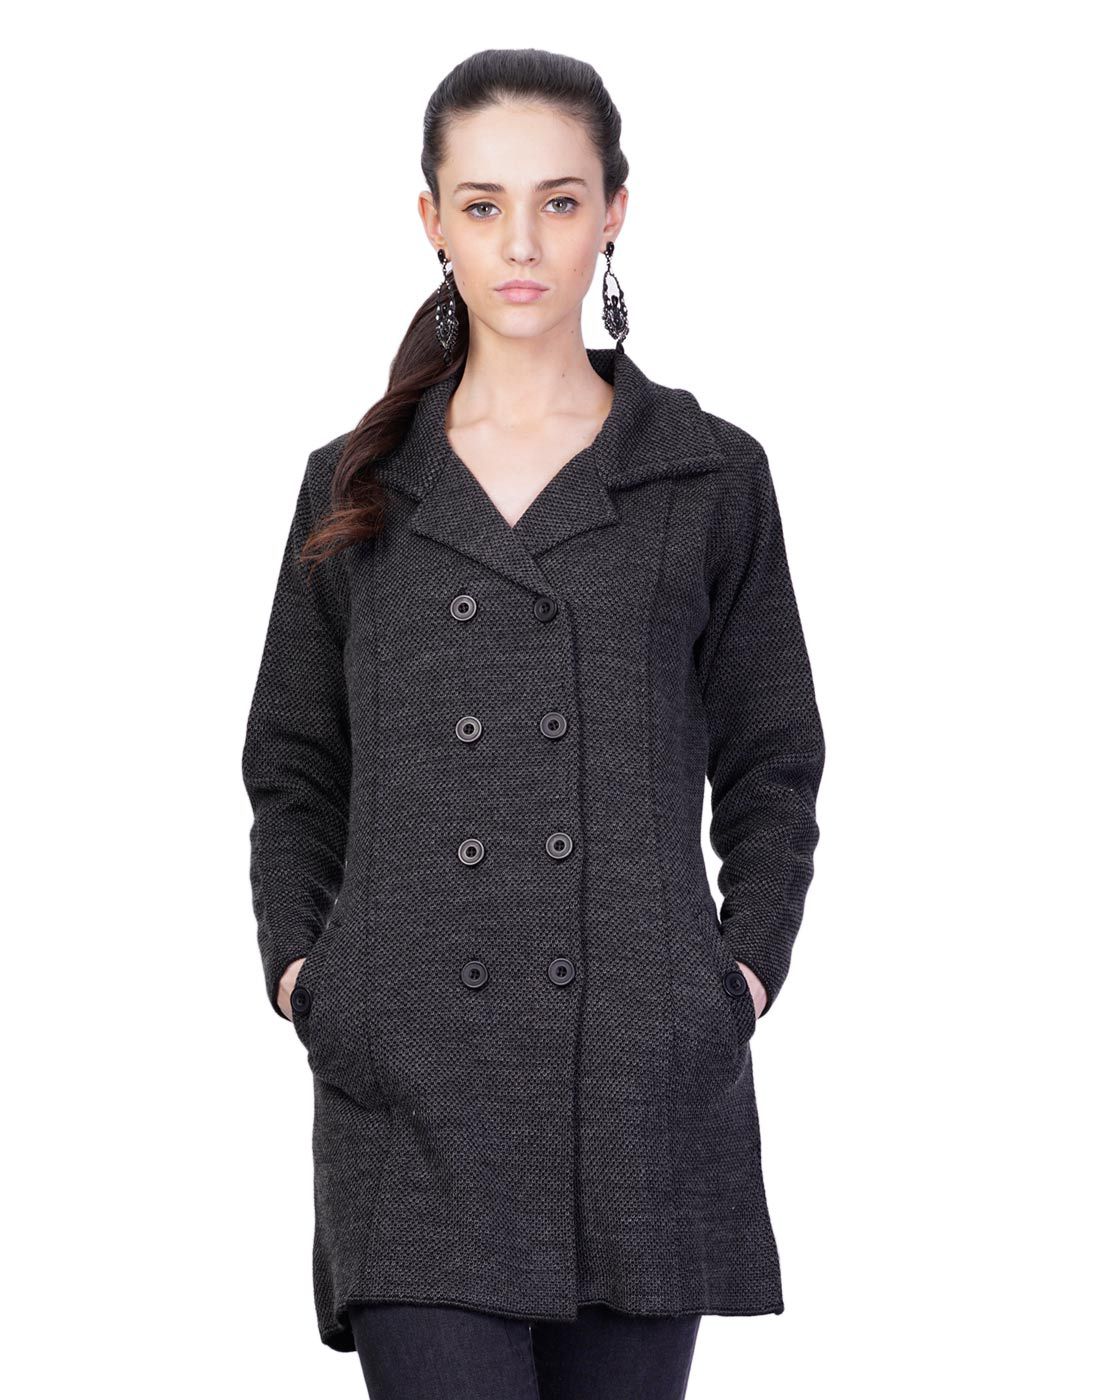 Buy Montrex Acro Wool Black Over coats Online at Best Prices in India ...